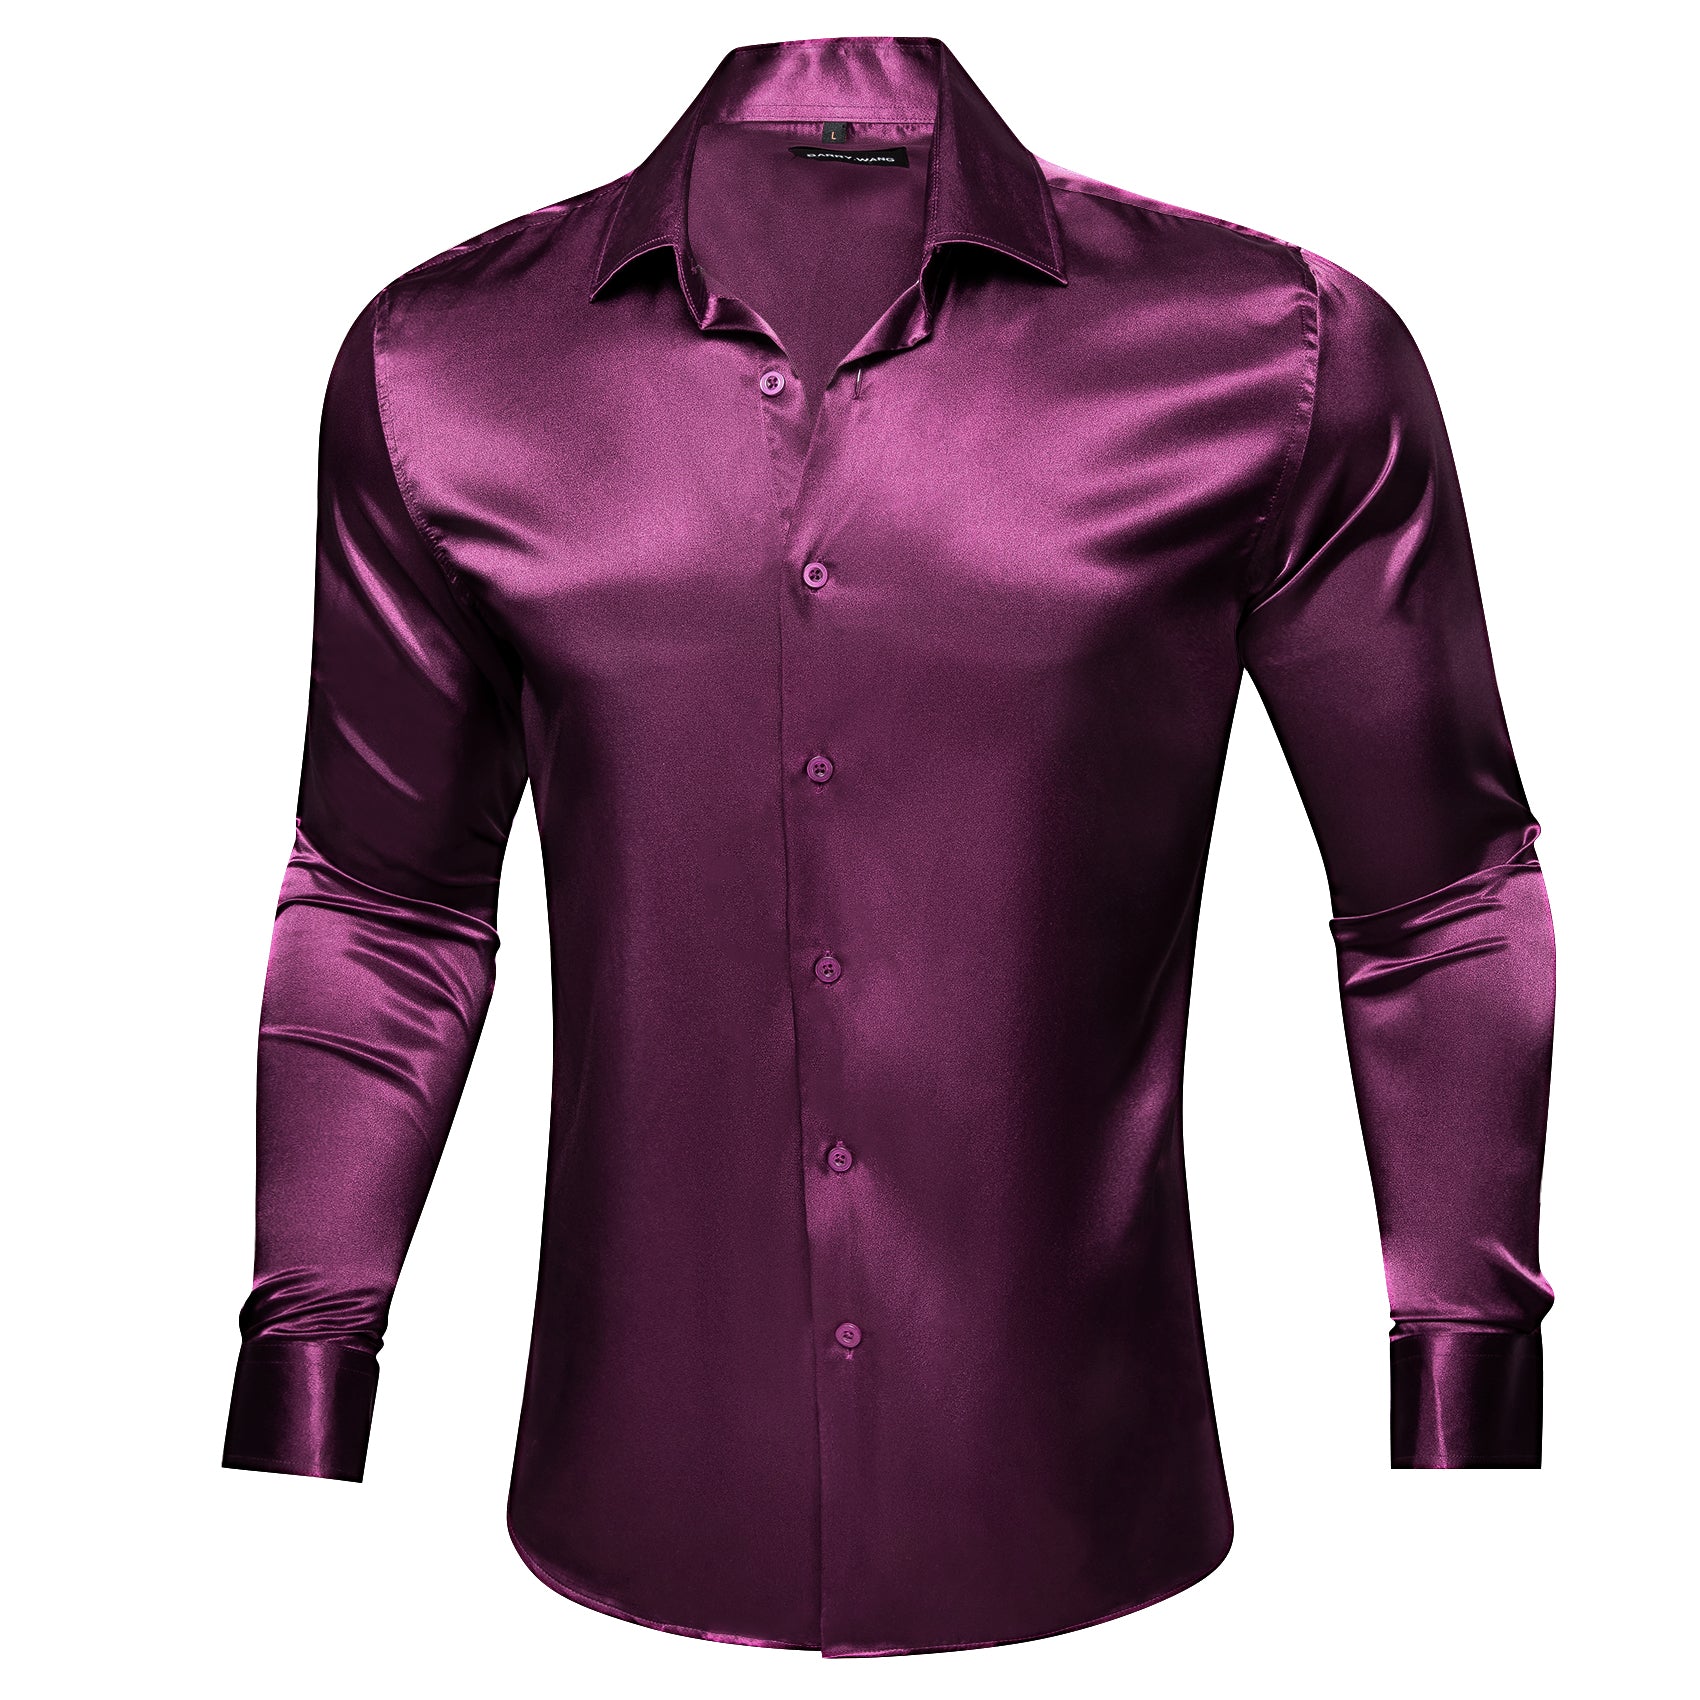 Barry.wang Purple Solid Silk Shirt